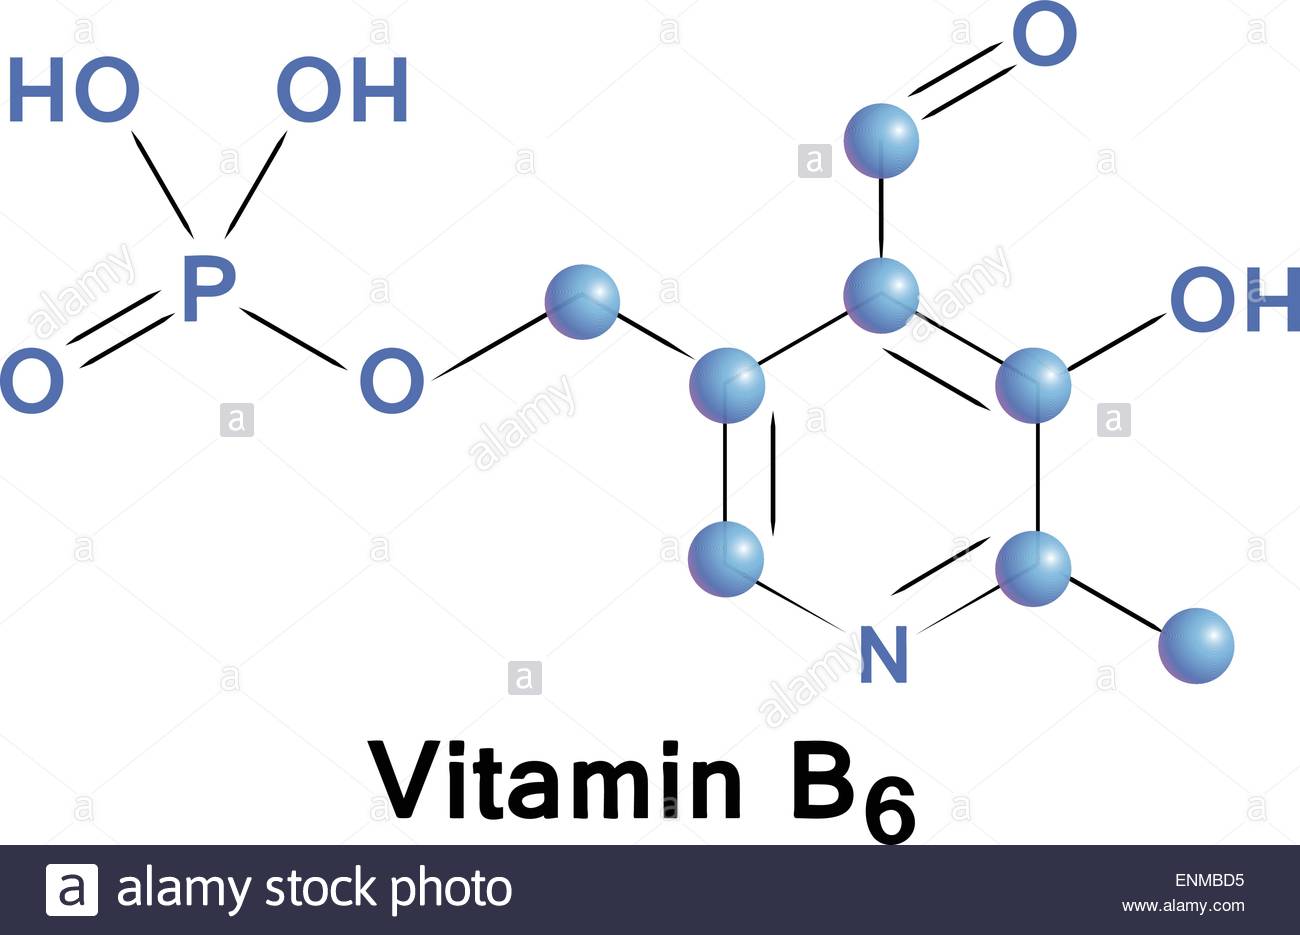 Vitamin B6 Chemical Formula, Molecule Structure, Medical Vector 